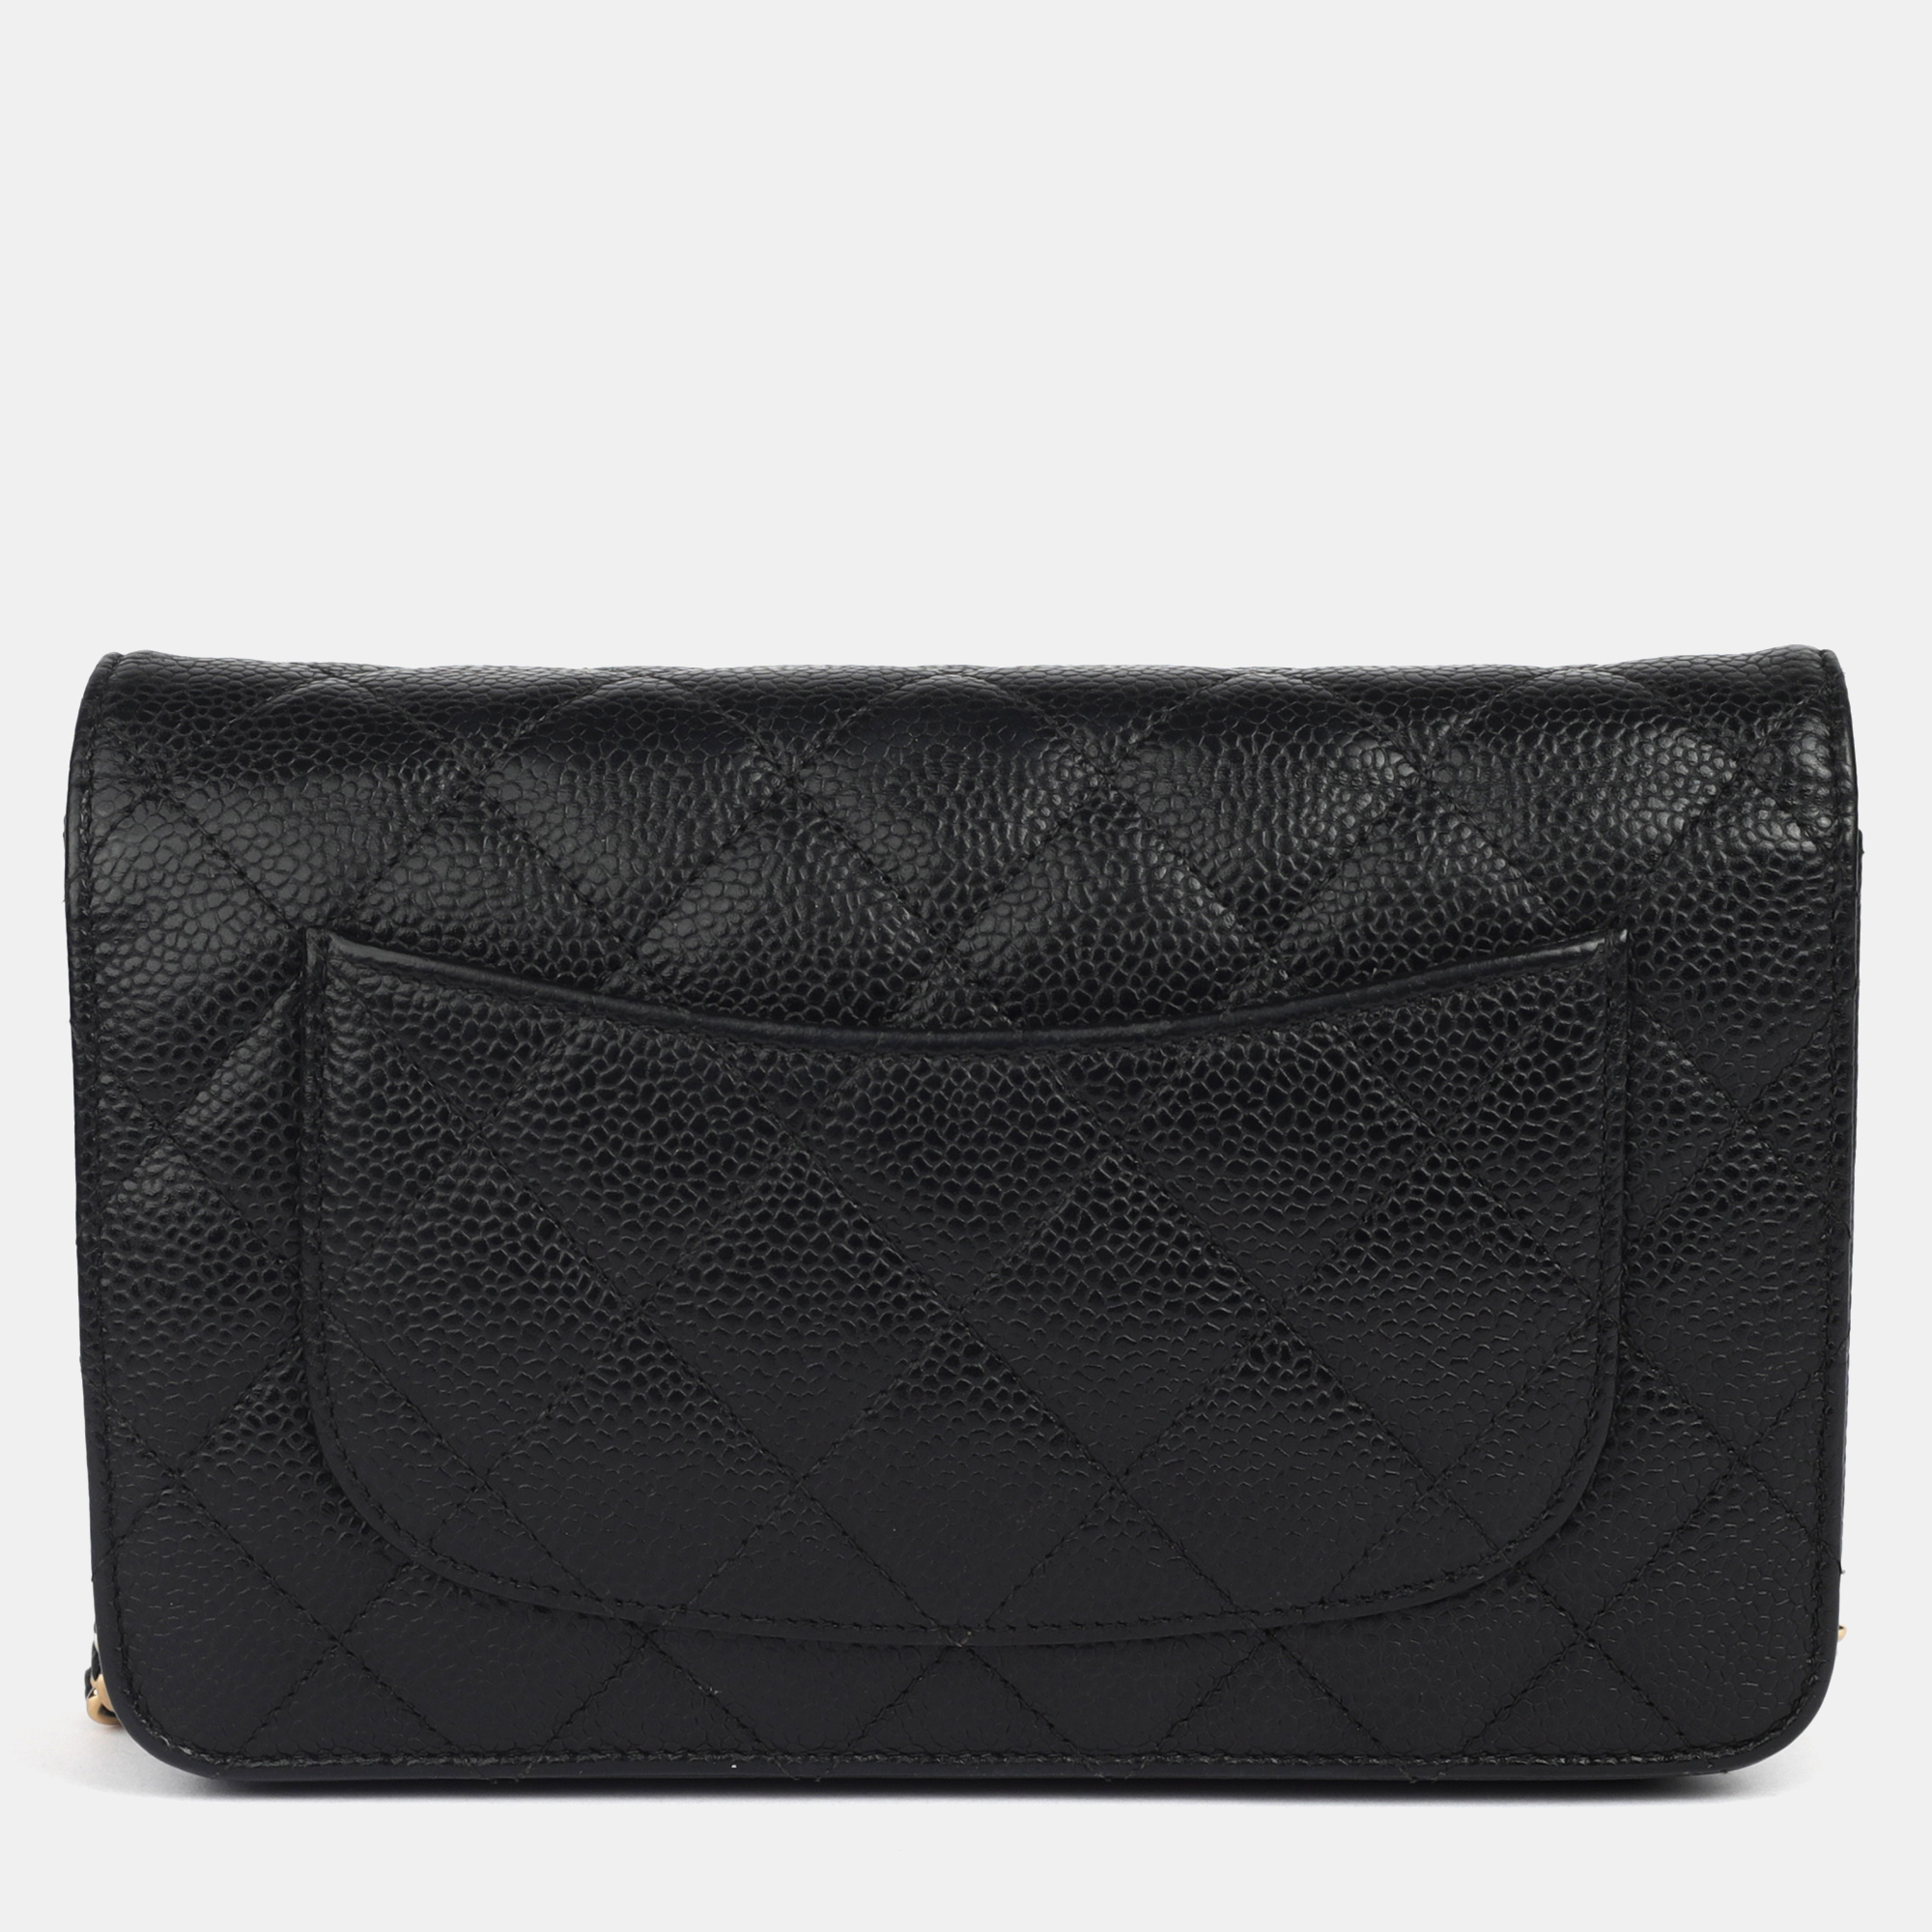 Chanel Black Caviar Leather Classic WOC Bag